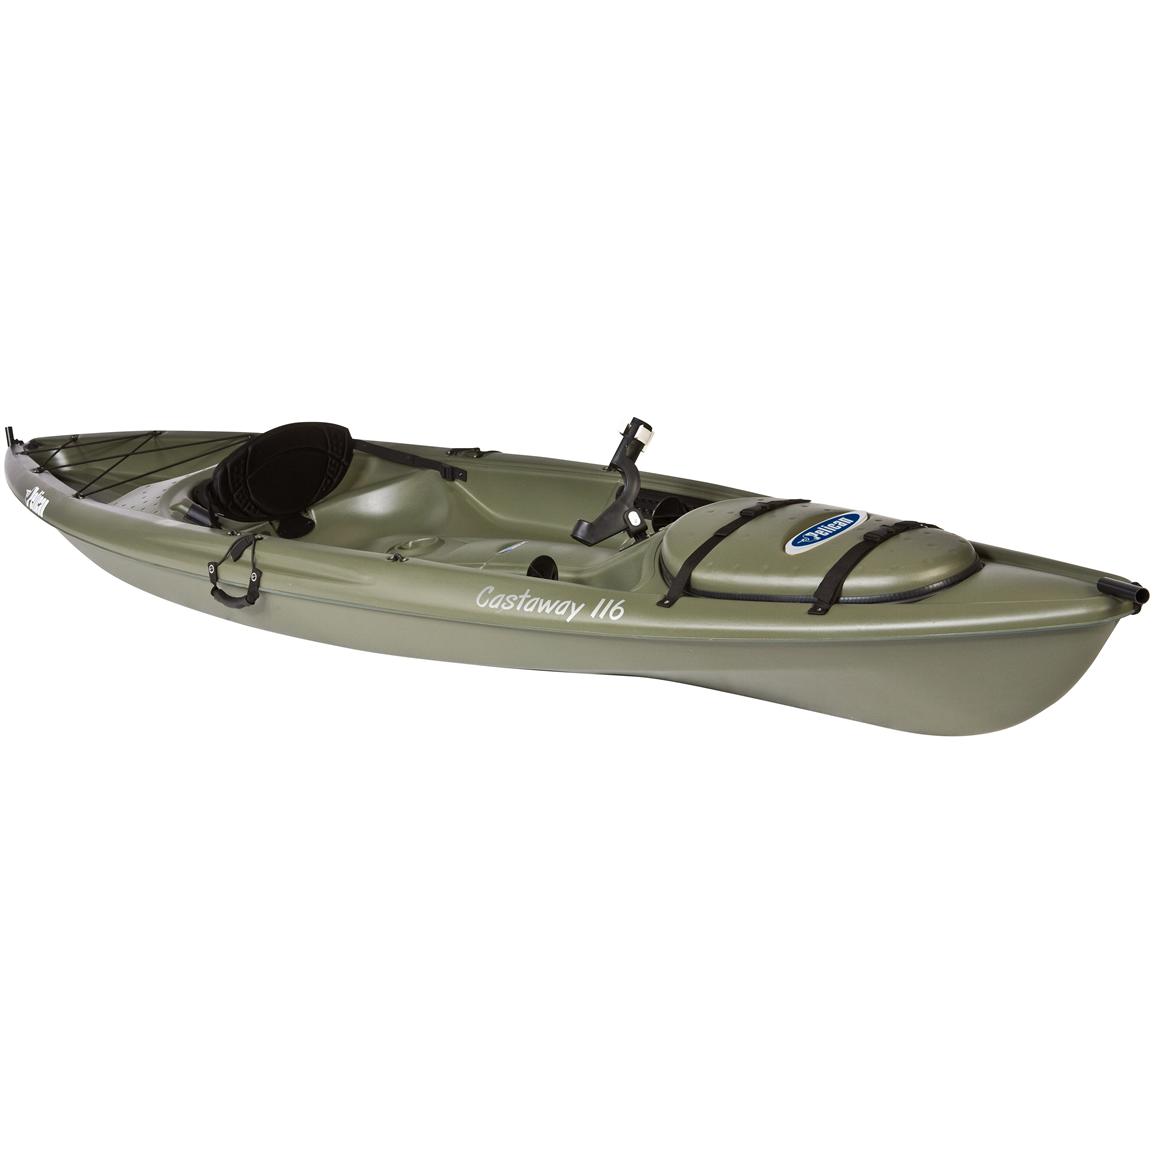 Pelicanâ„¢ Castaway 116 Kayak, Khaki - 206253, Canoes 